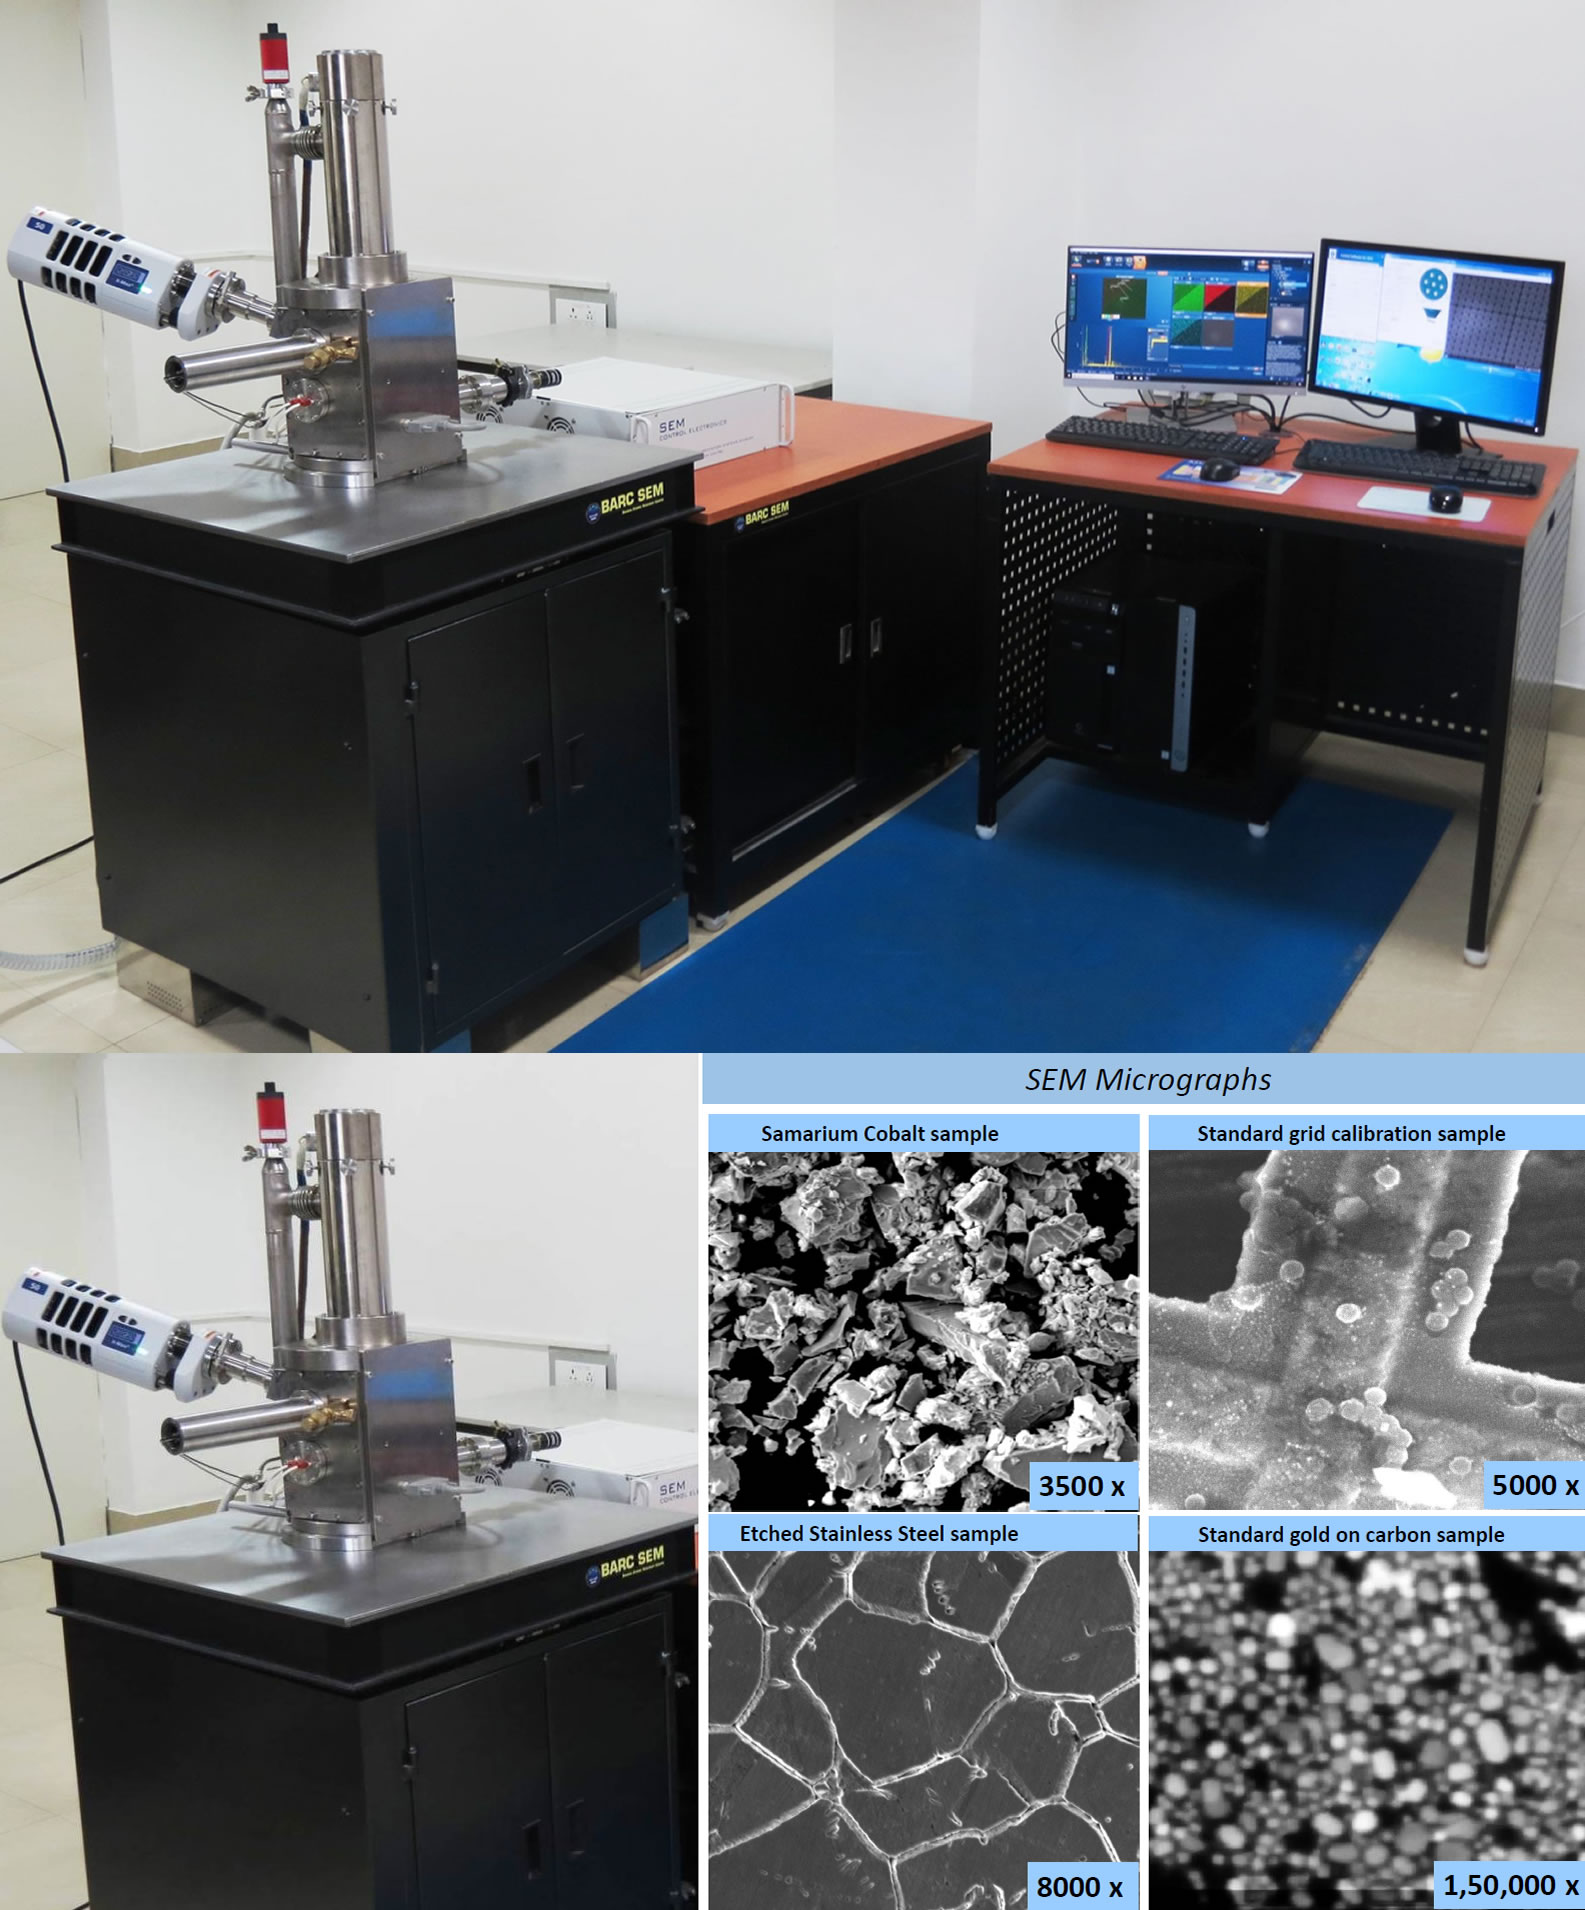 Indigenous Development of Scanning Electron Microscope